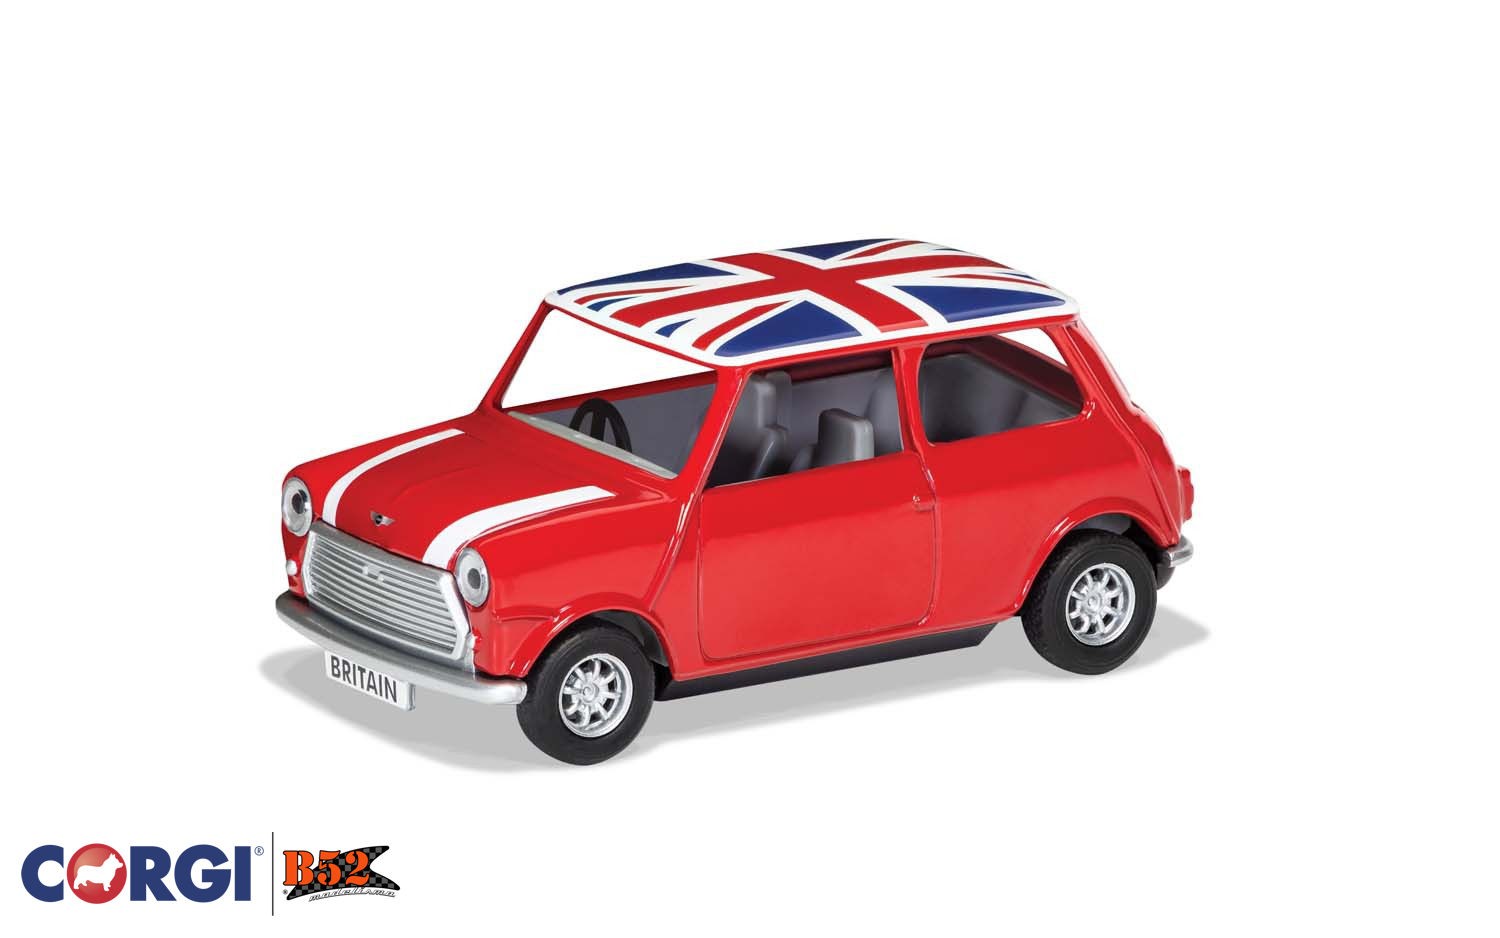 Corgi - Best of British Classic Mini - Red: GS82109